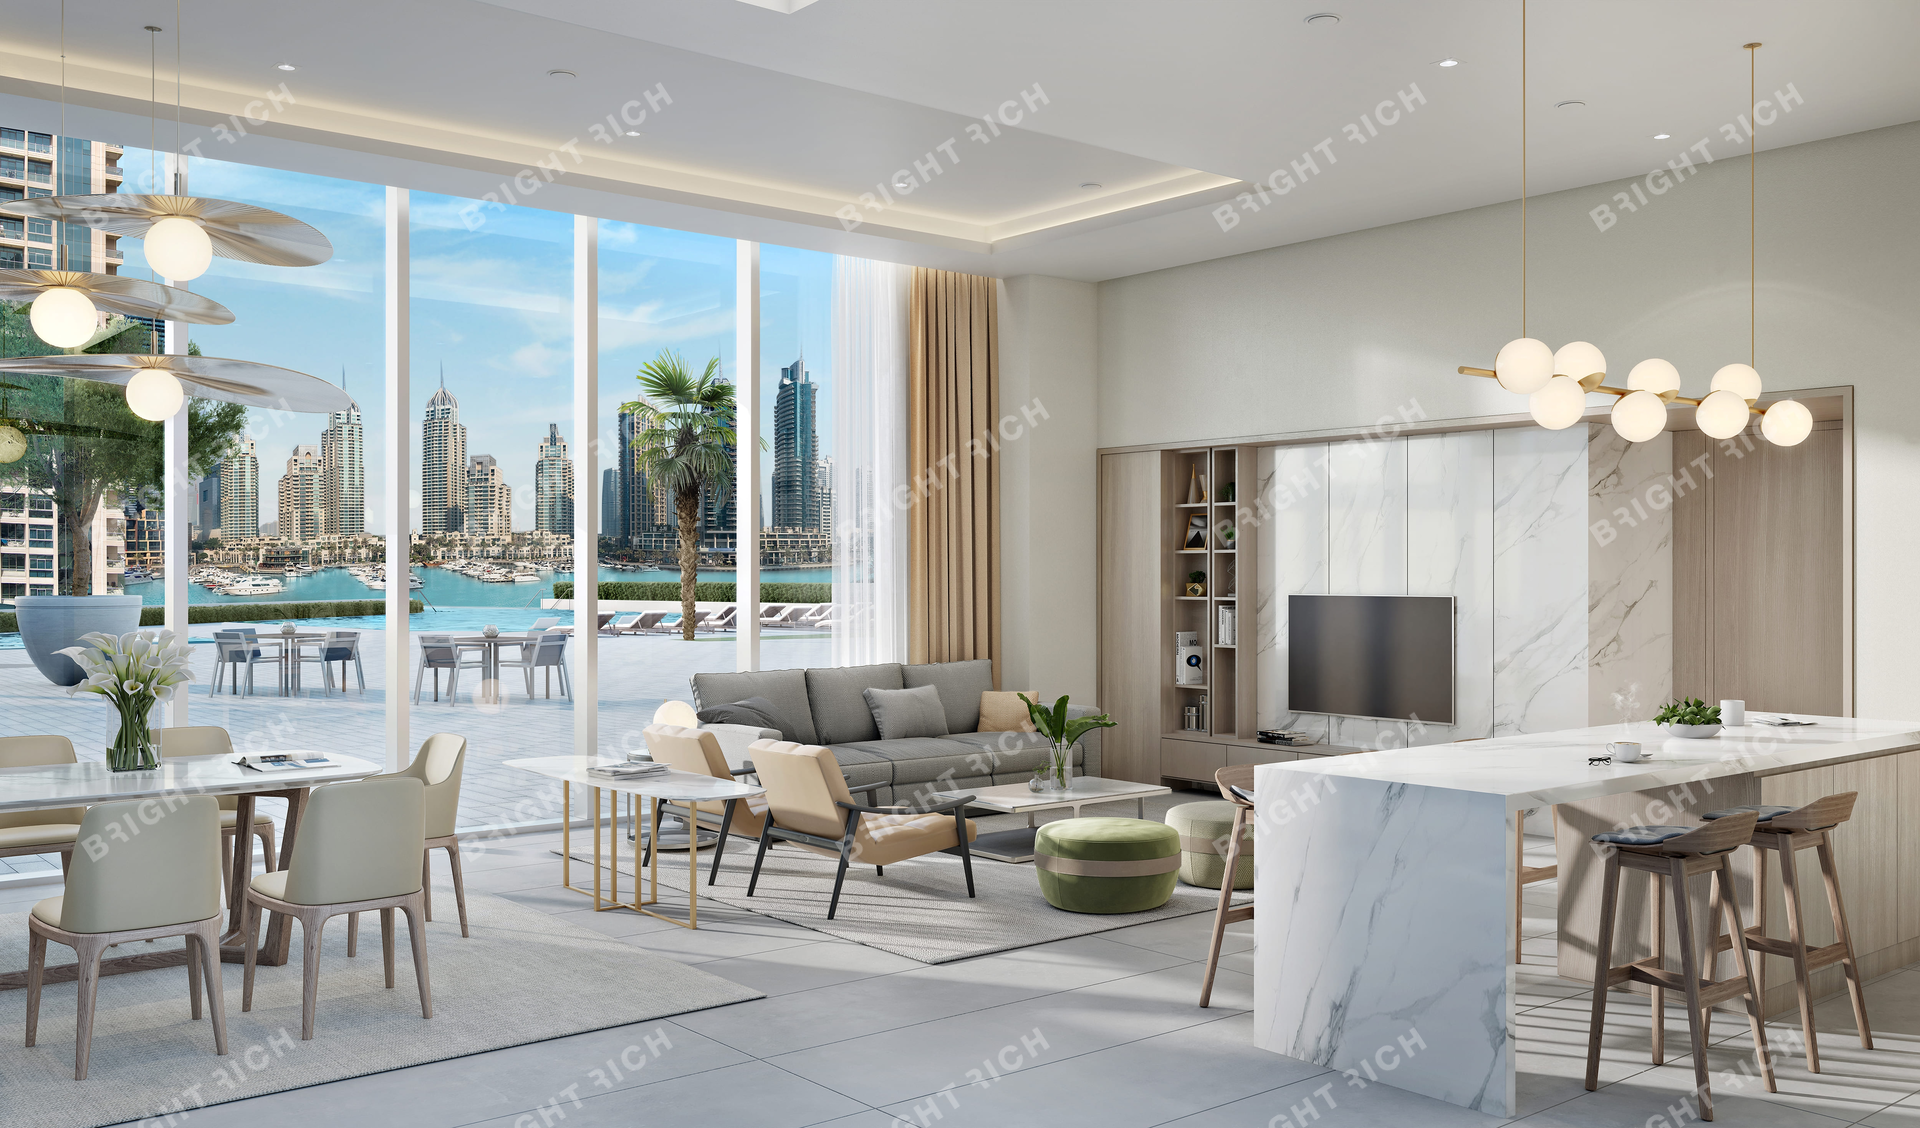 Liv Marina, apart complex in Dubai - 10